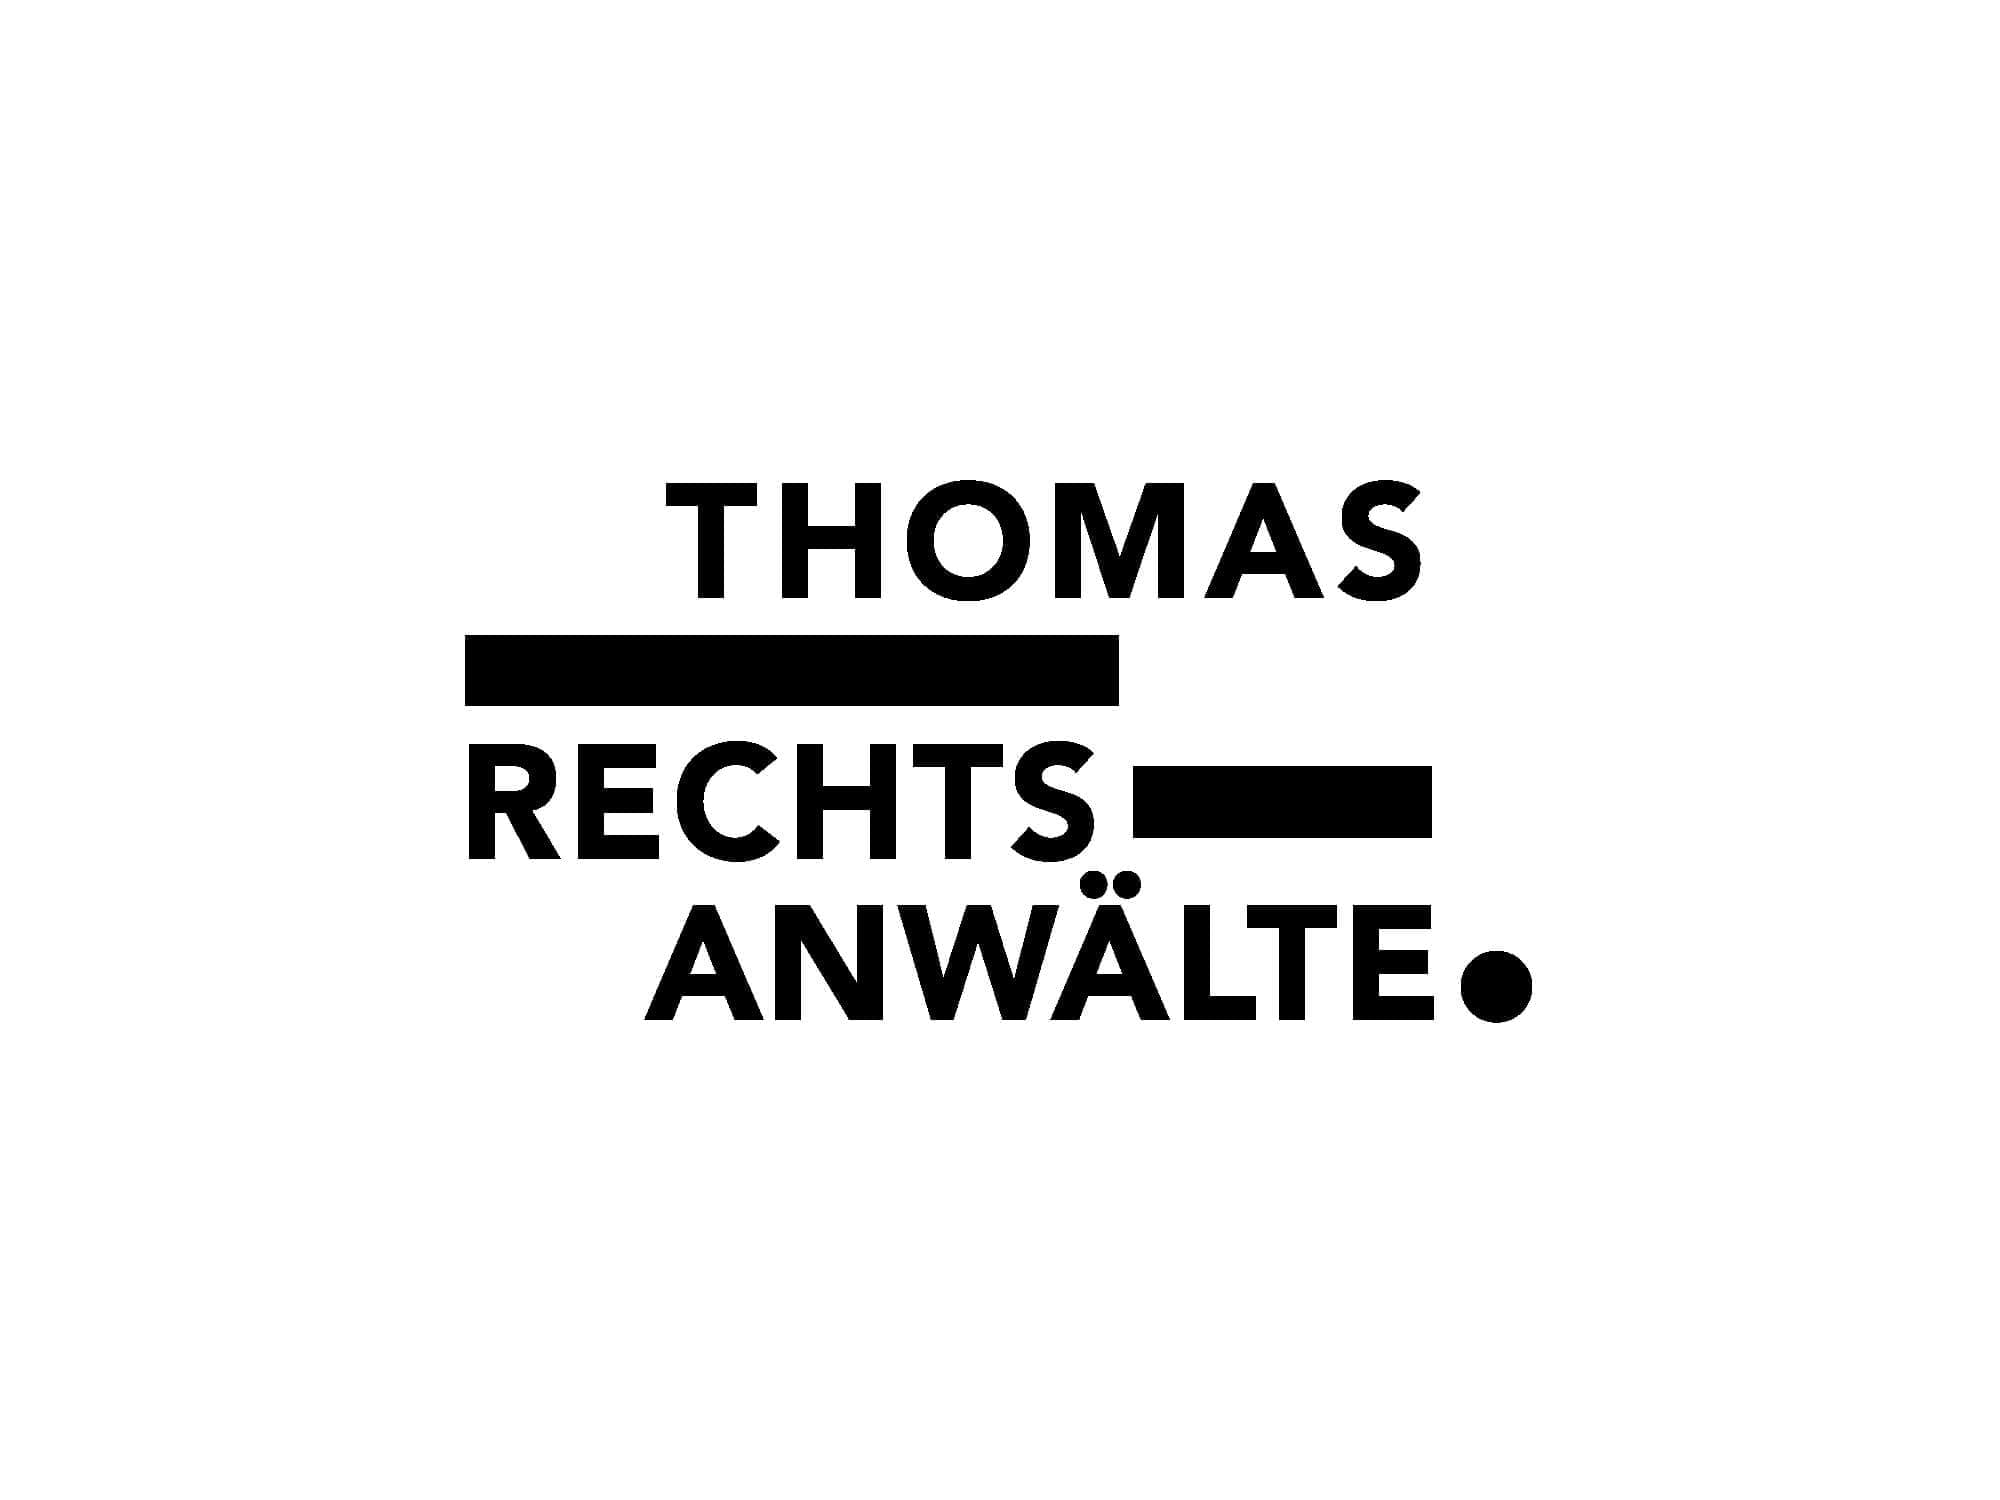 Thomas rechtsanwalte extension du logotype de Thomas the startup lawyers. du Ichetkar inspiration Bauhaus